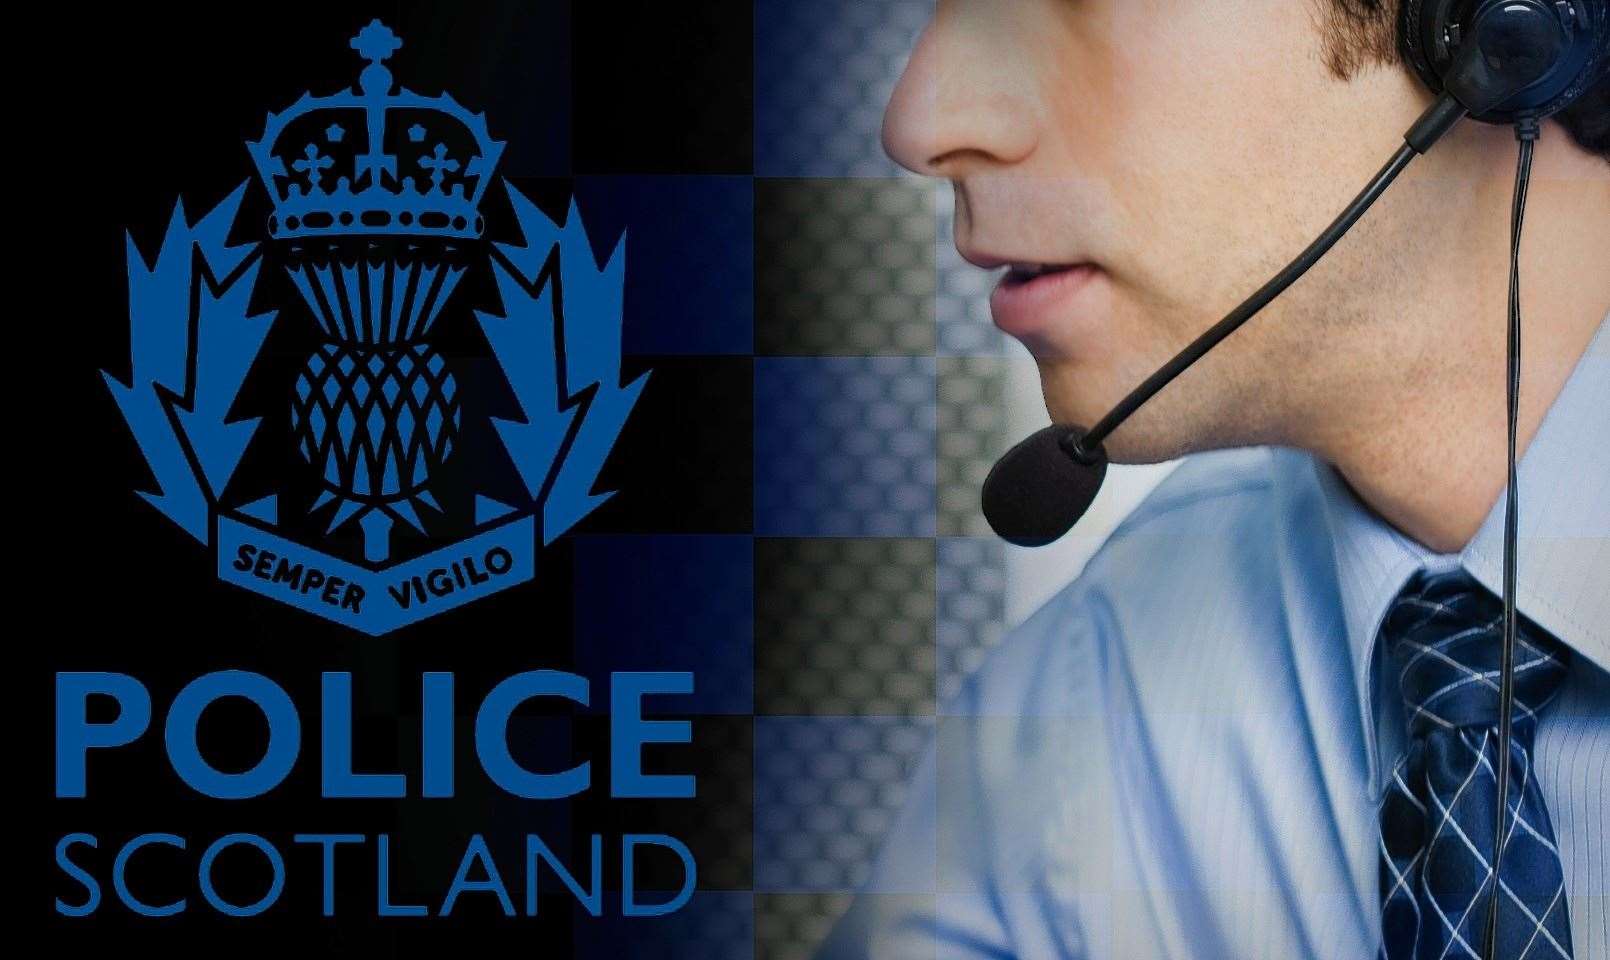 Police Scotland have appealed for information.